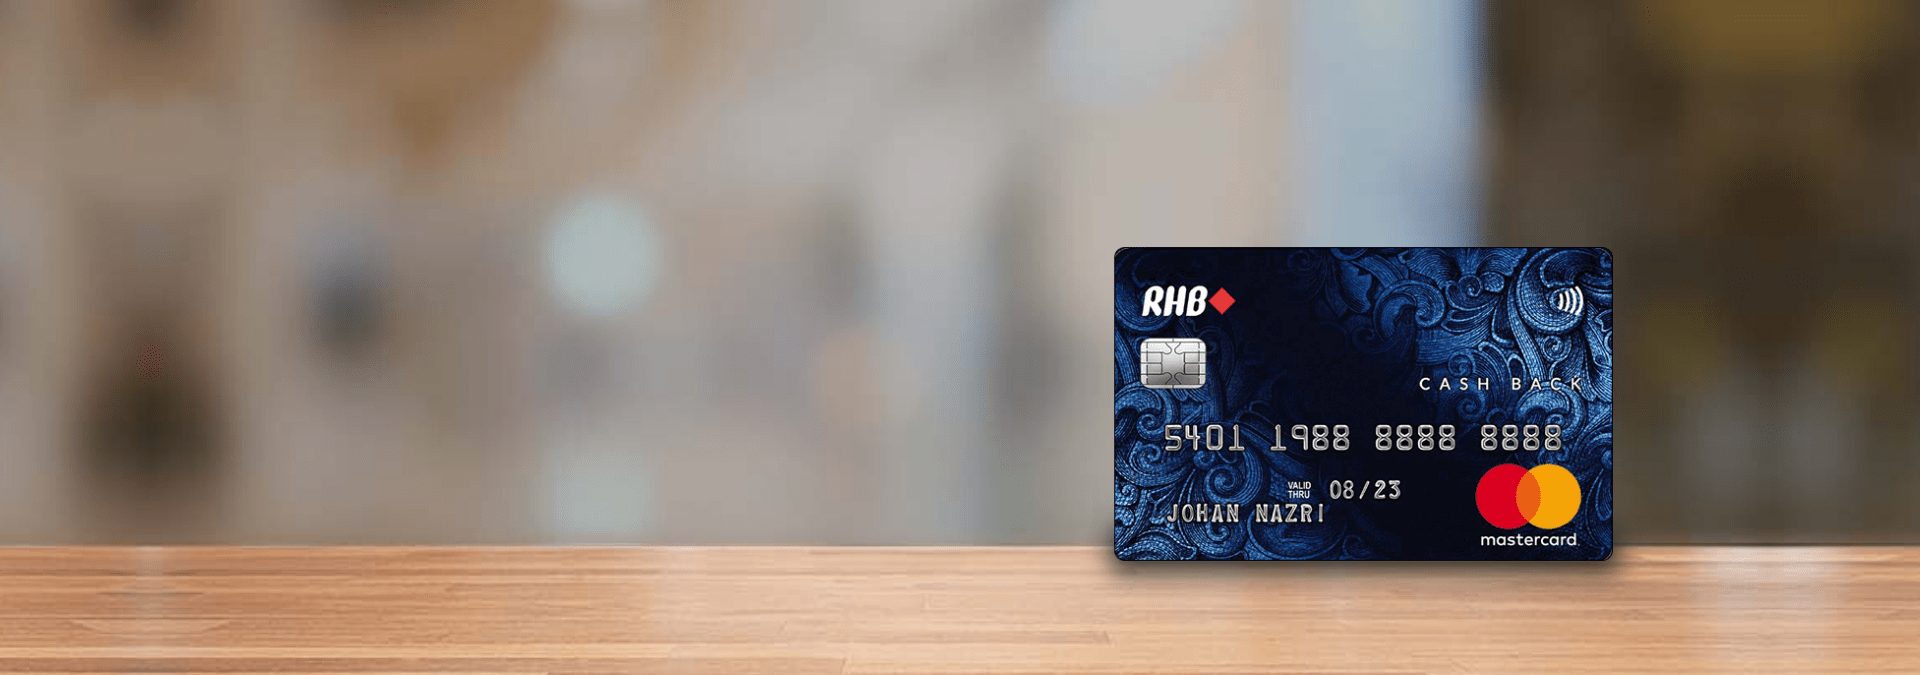 rhb-cash-back-credit-card-banner